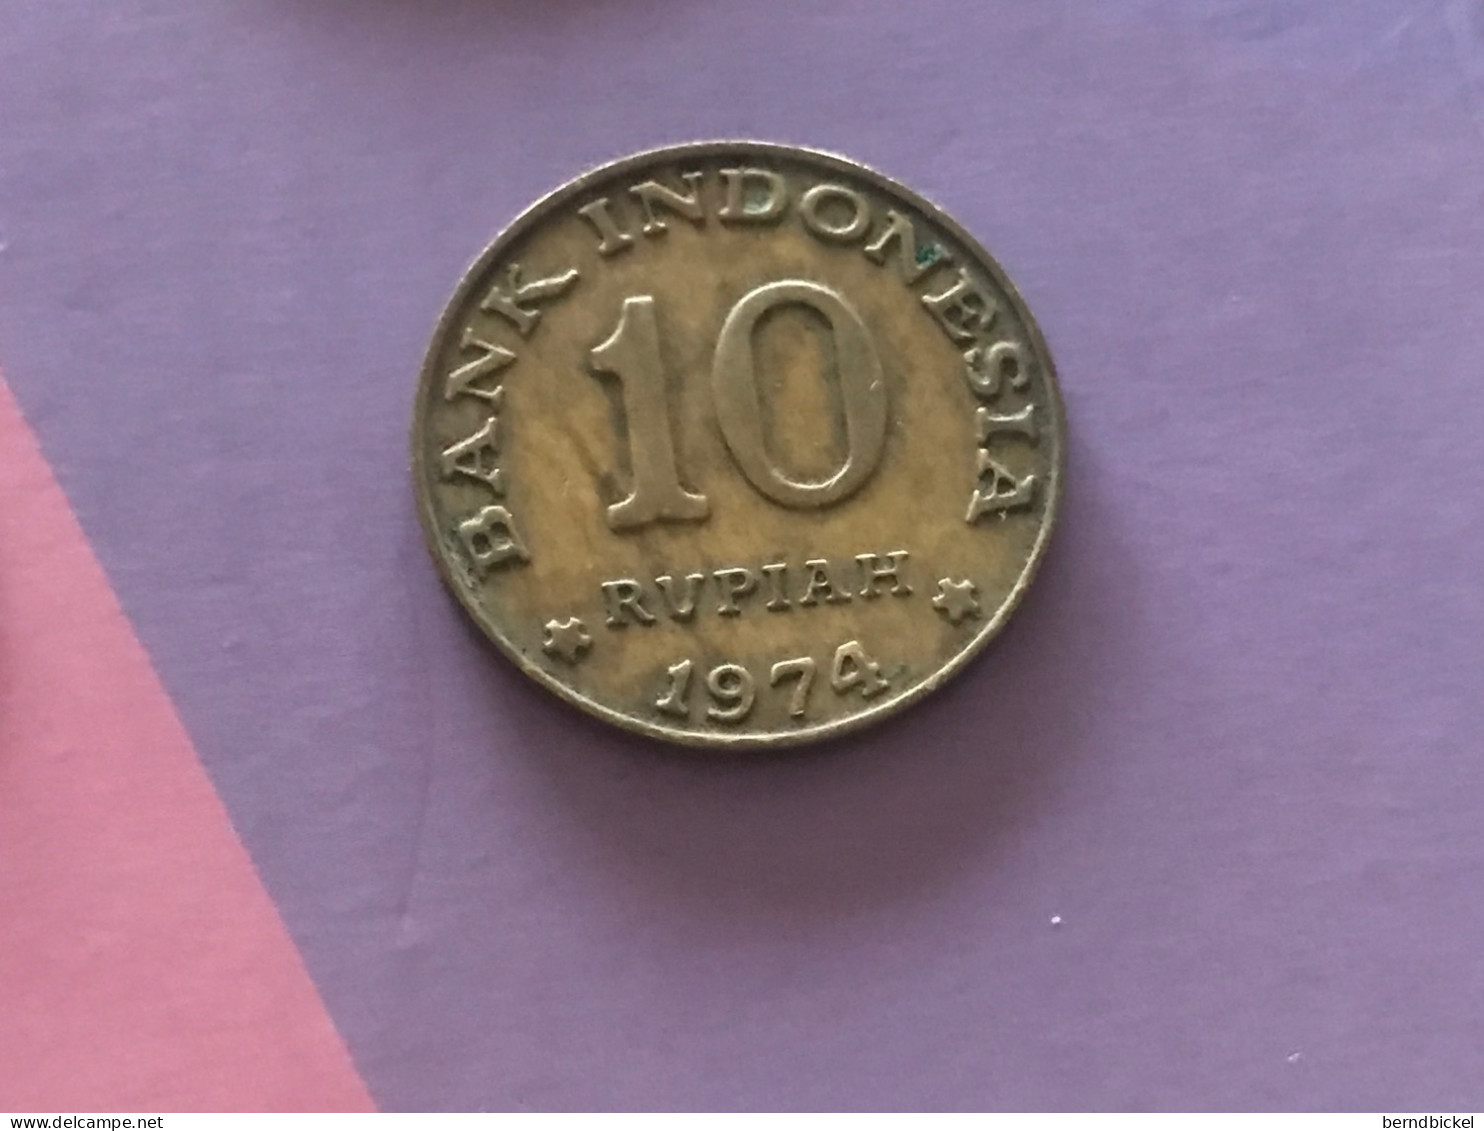 Münze Münzen Umlaufmünze Indonesien 10 Rupien 1974 - Indonesien